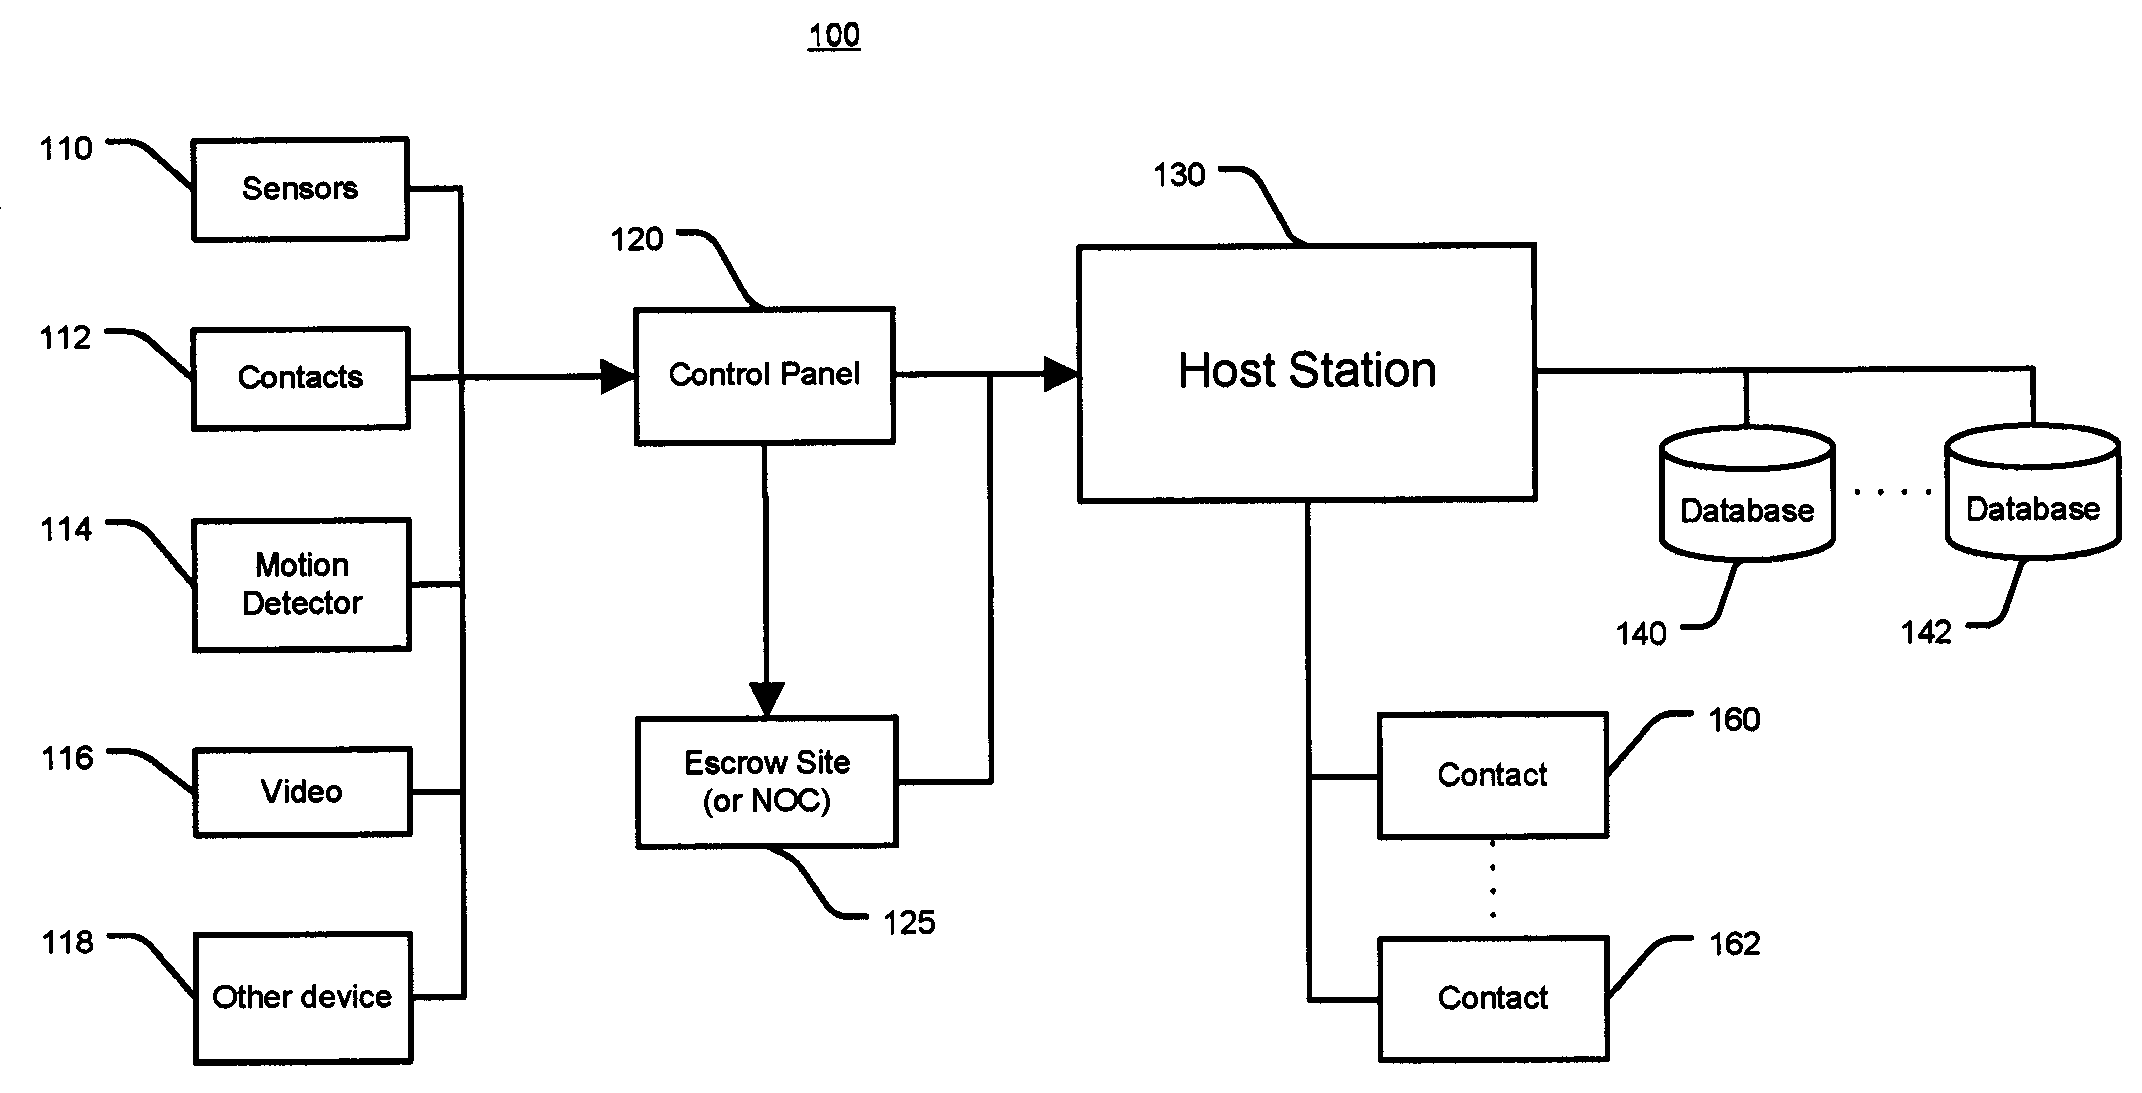 System and Method for Alarm Signaling During Alarm System Destruction